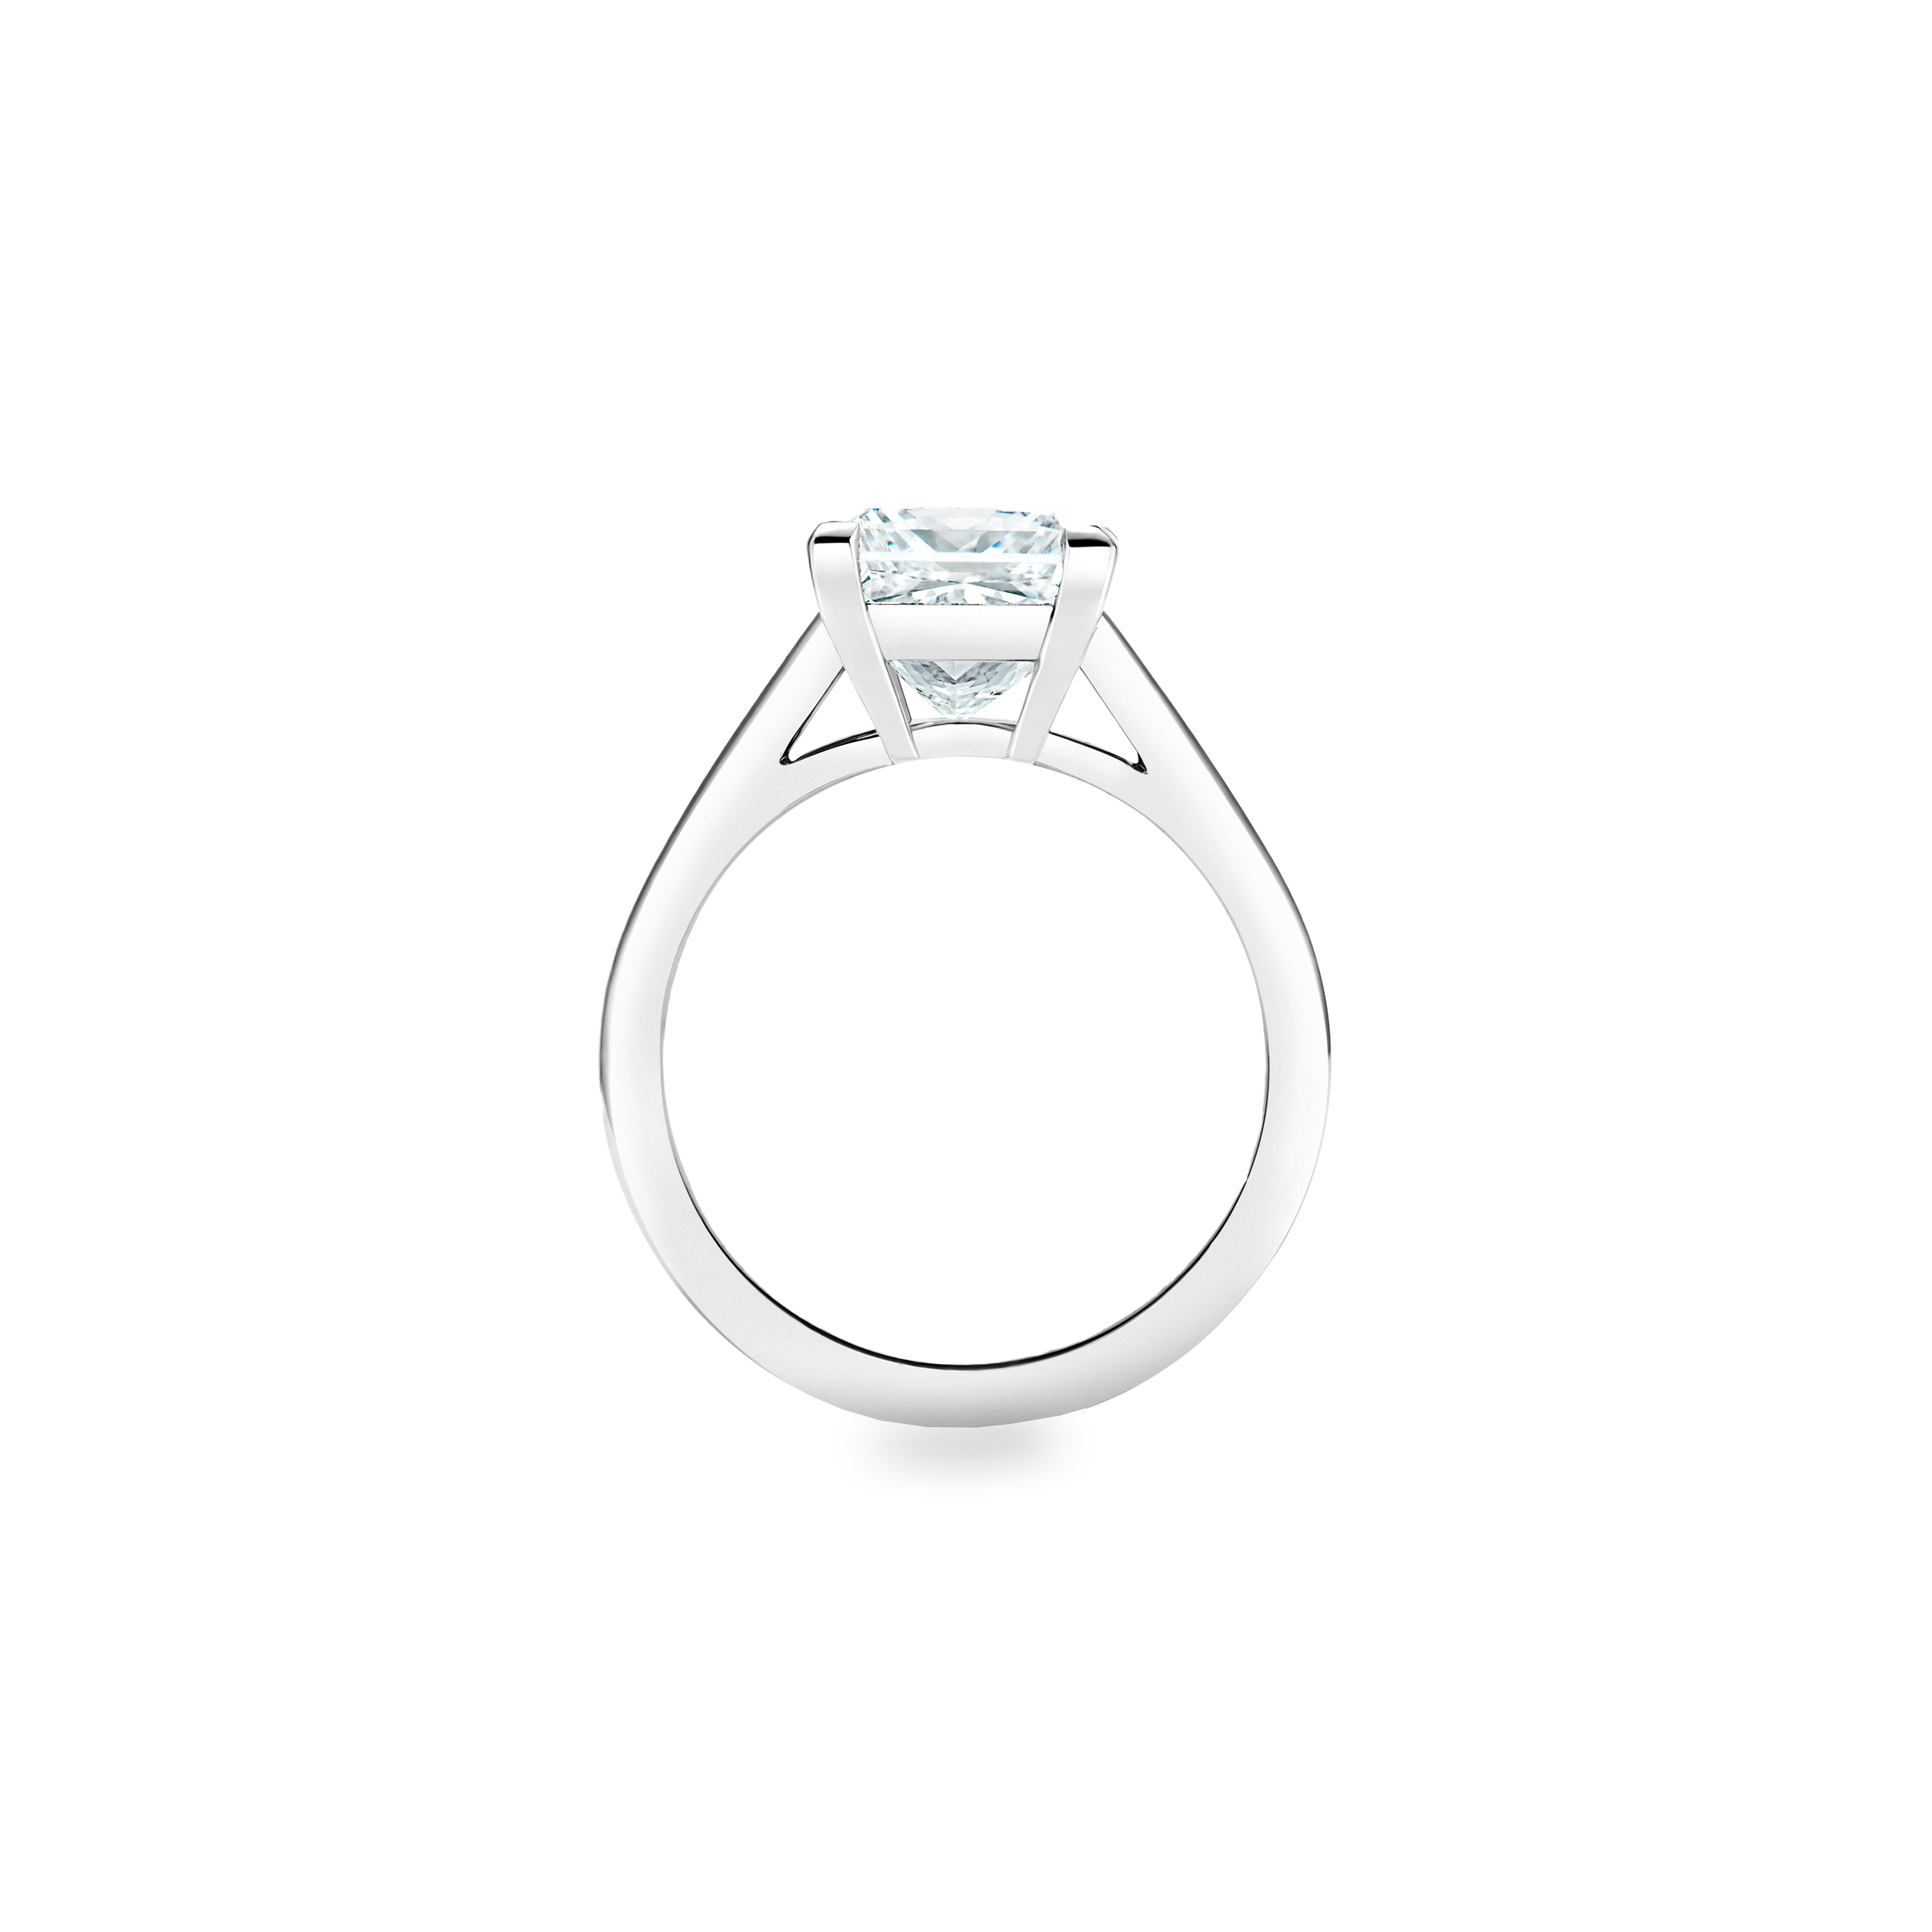 DB Classic Simple Shank Radiant Square Cut diamond ring, image 2